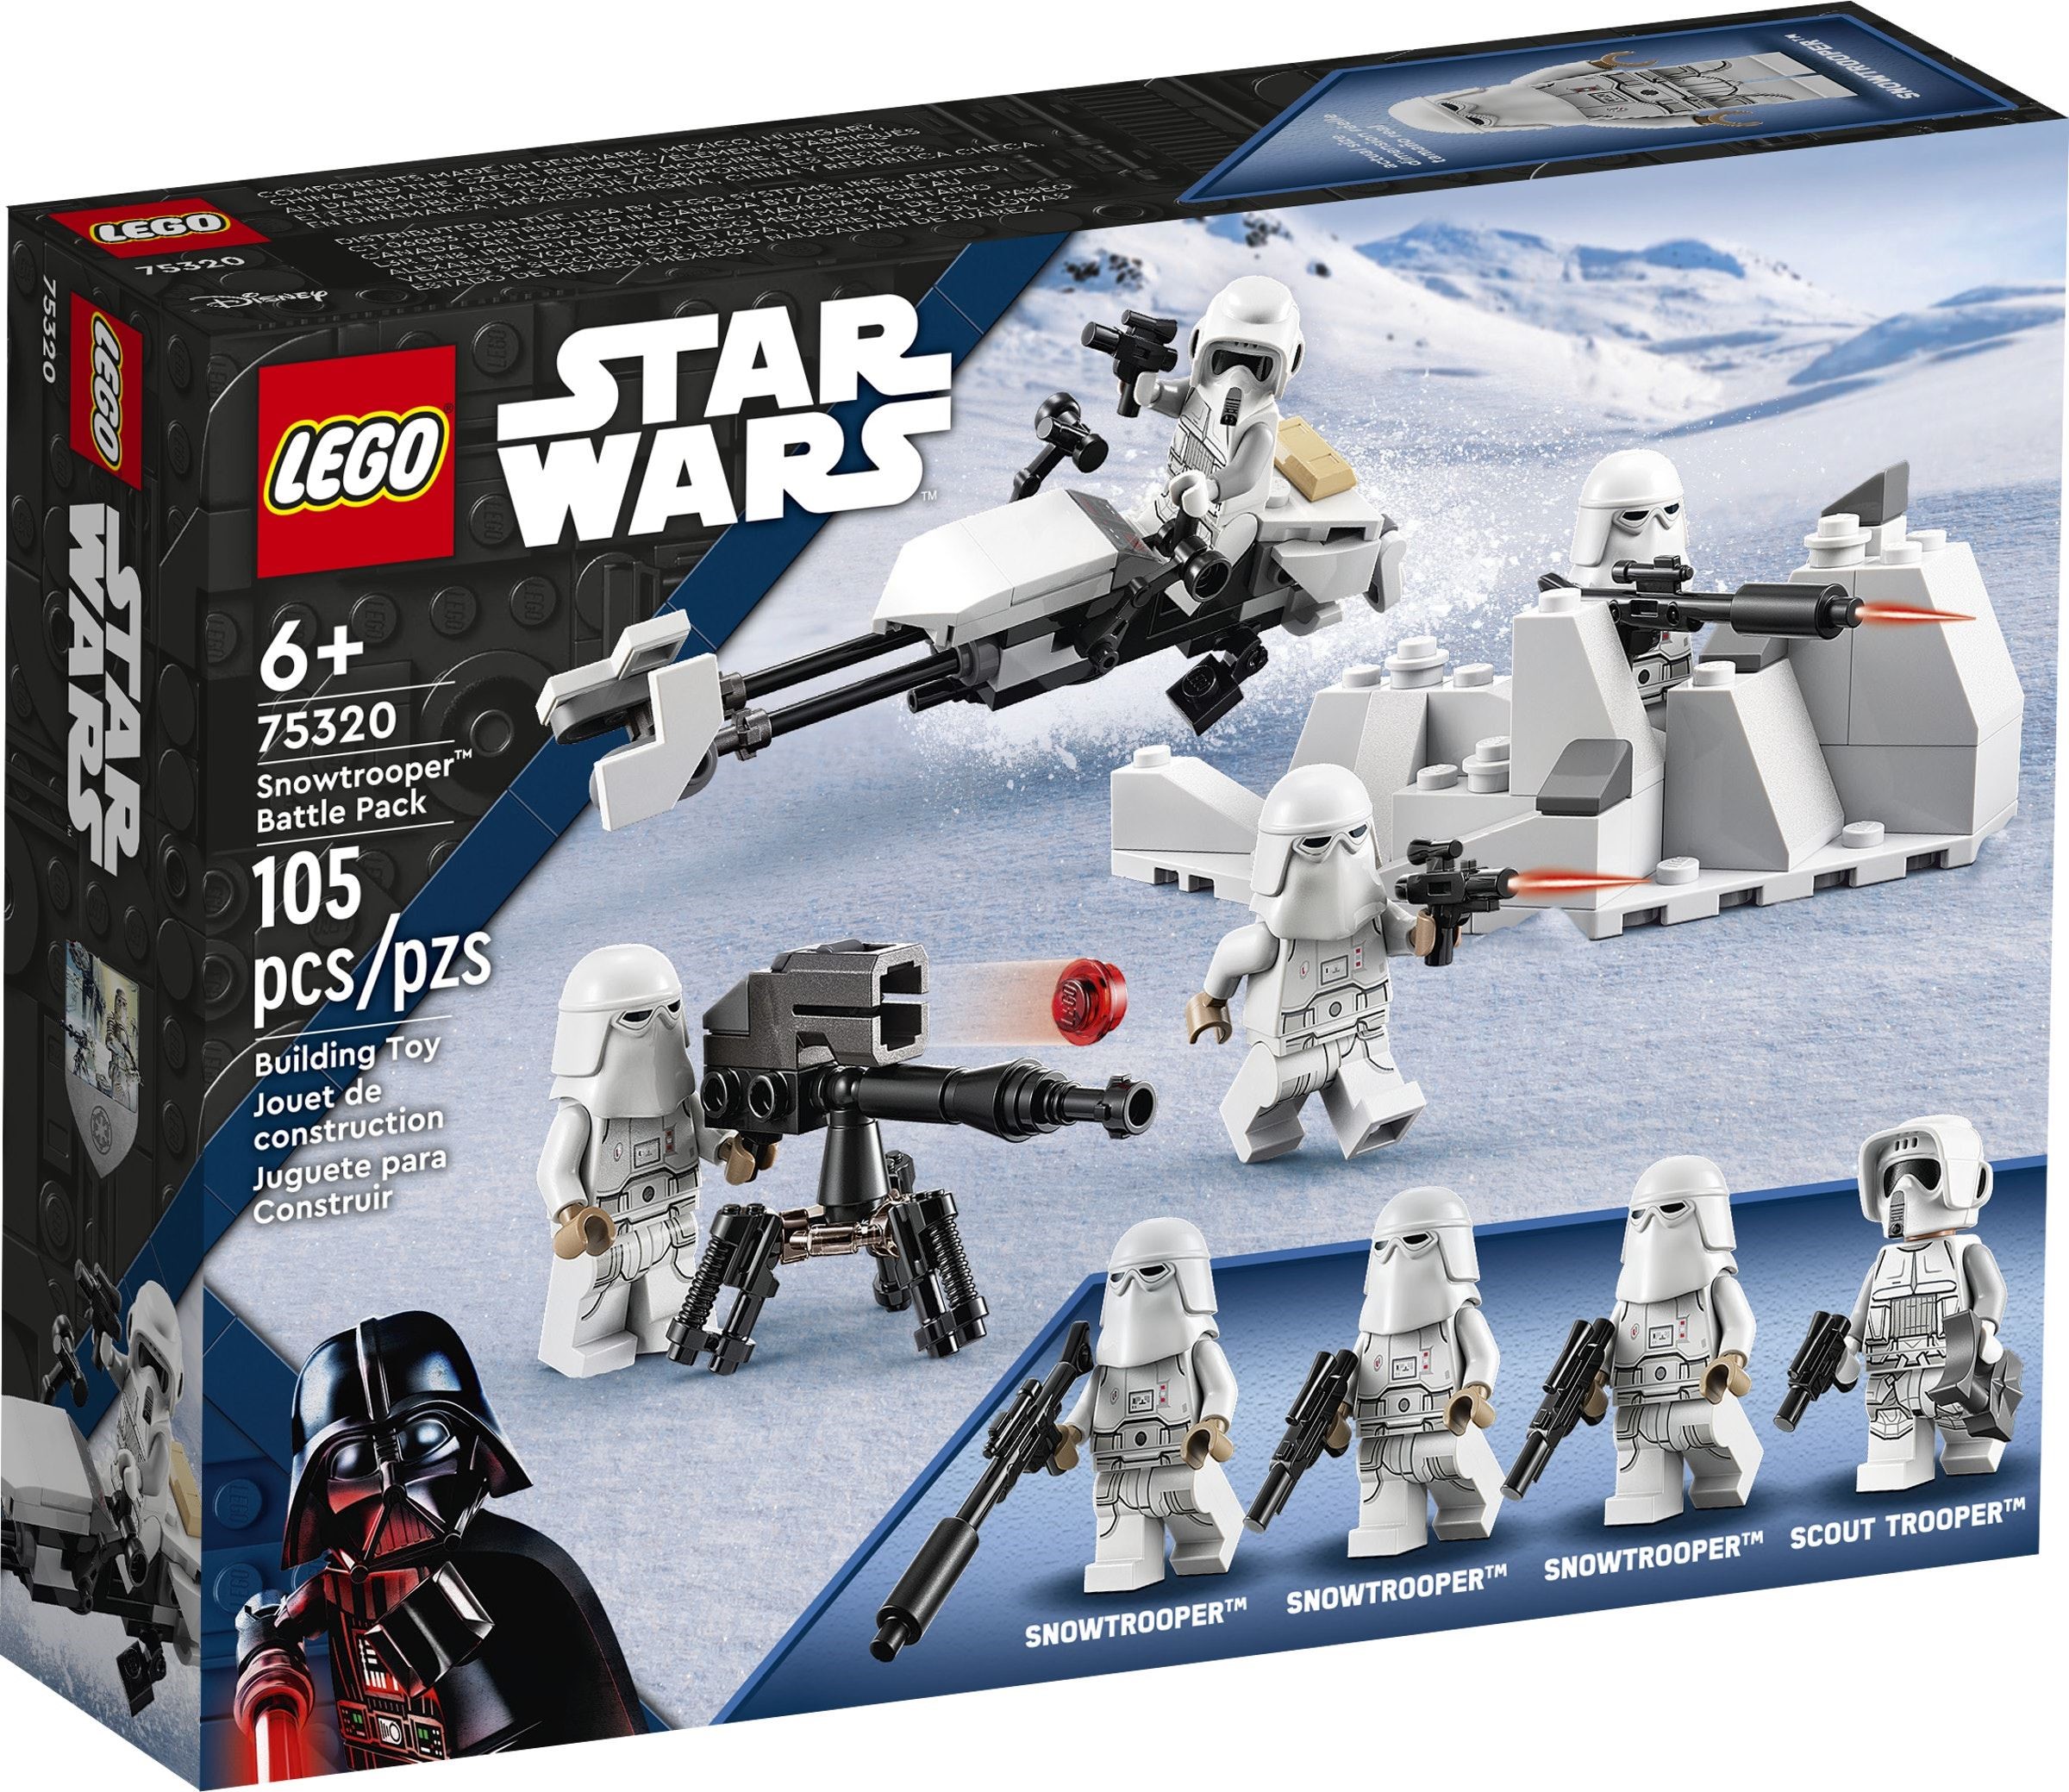 Lego ® pair of legs legs polybag star wars choose model new 